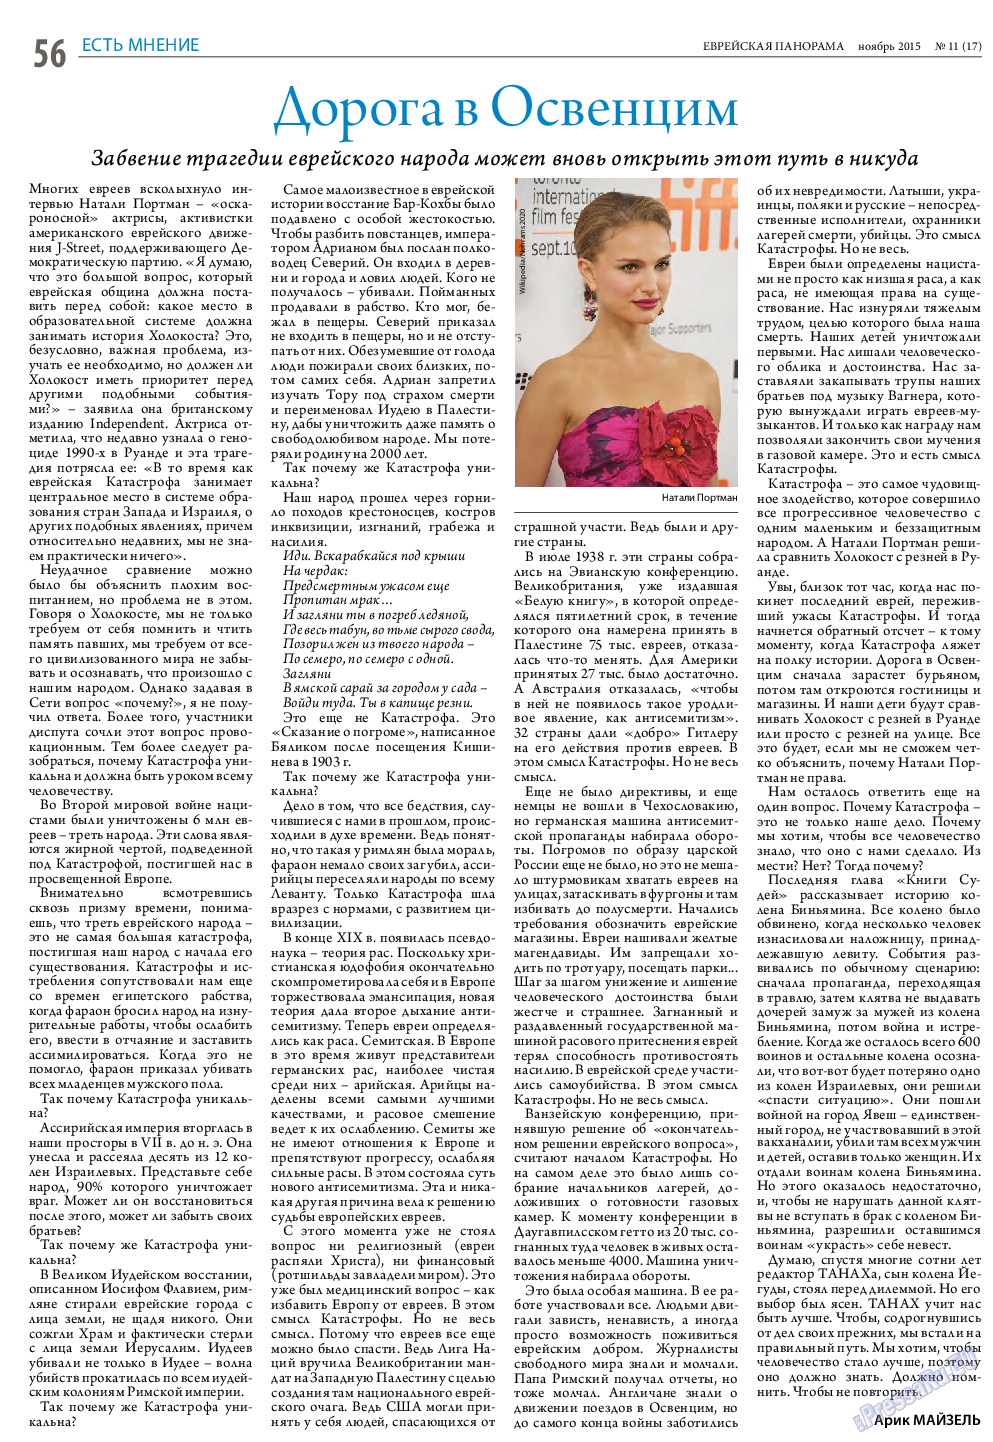 Еврейская панорама, газета. 2015 №11 стр.56